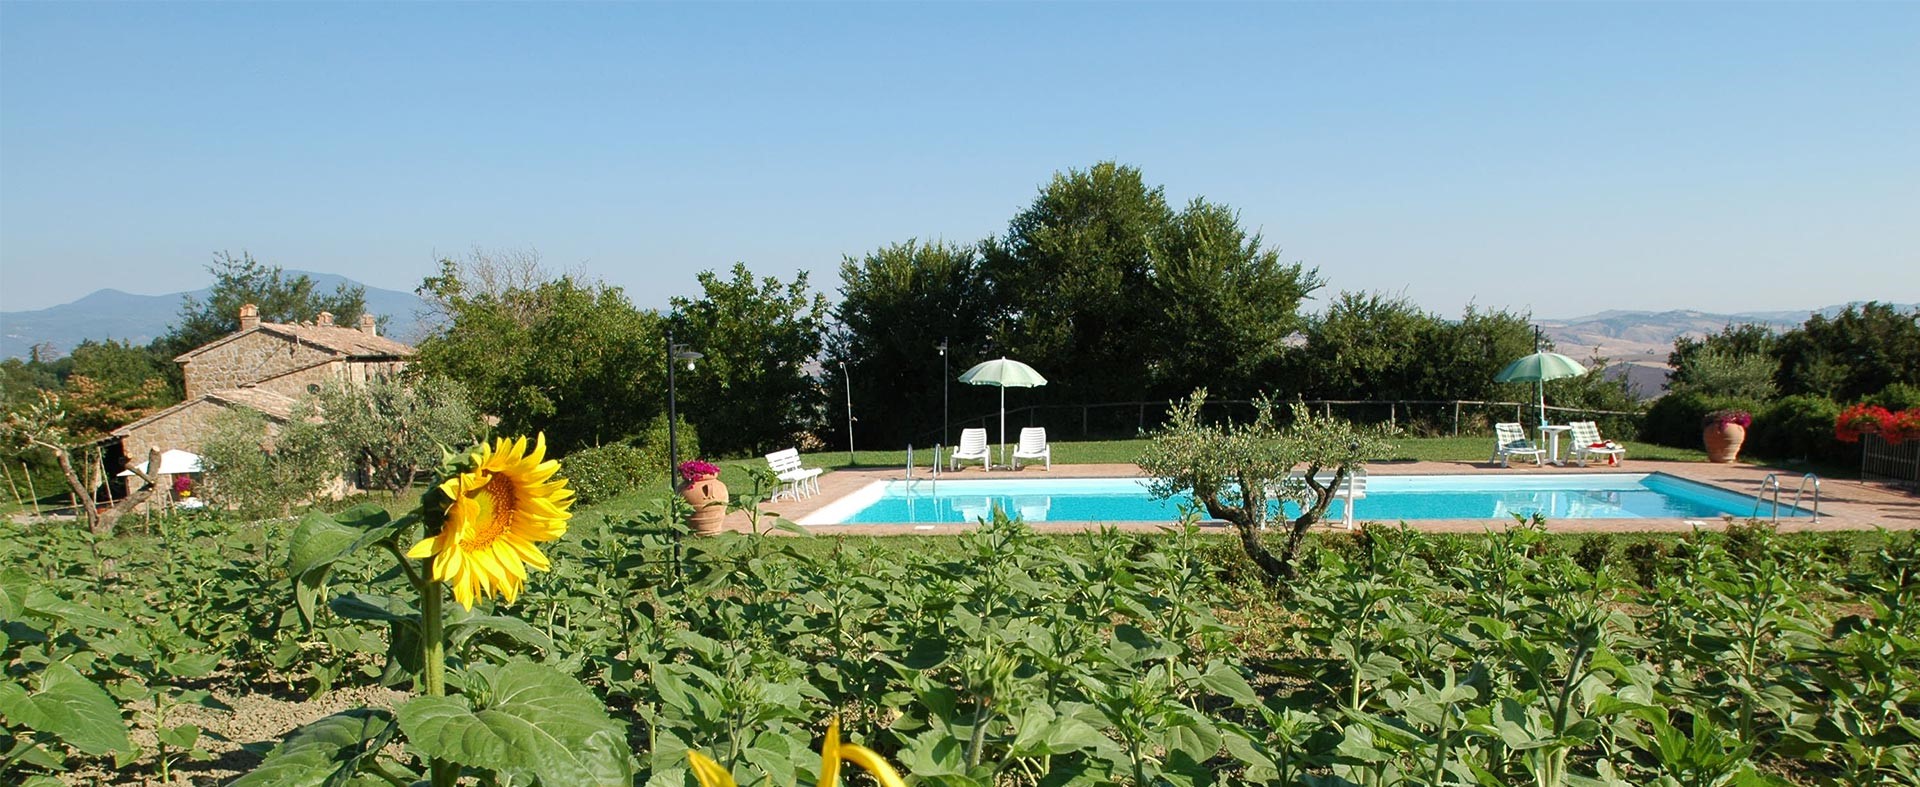 32_8b1063d_Agriturismo, kindvriendelijk vakantiehuis met zwembad, kleinschalig, Bolsena, Lazio, Poggio Porsenna, ItaliÃ«, (12)